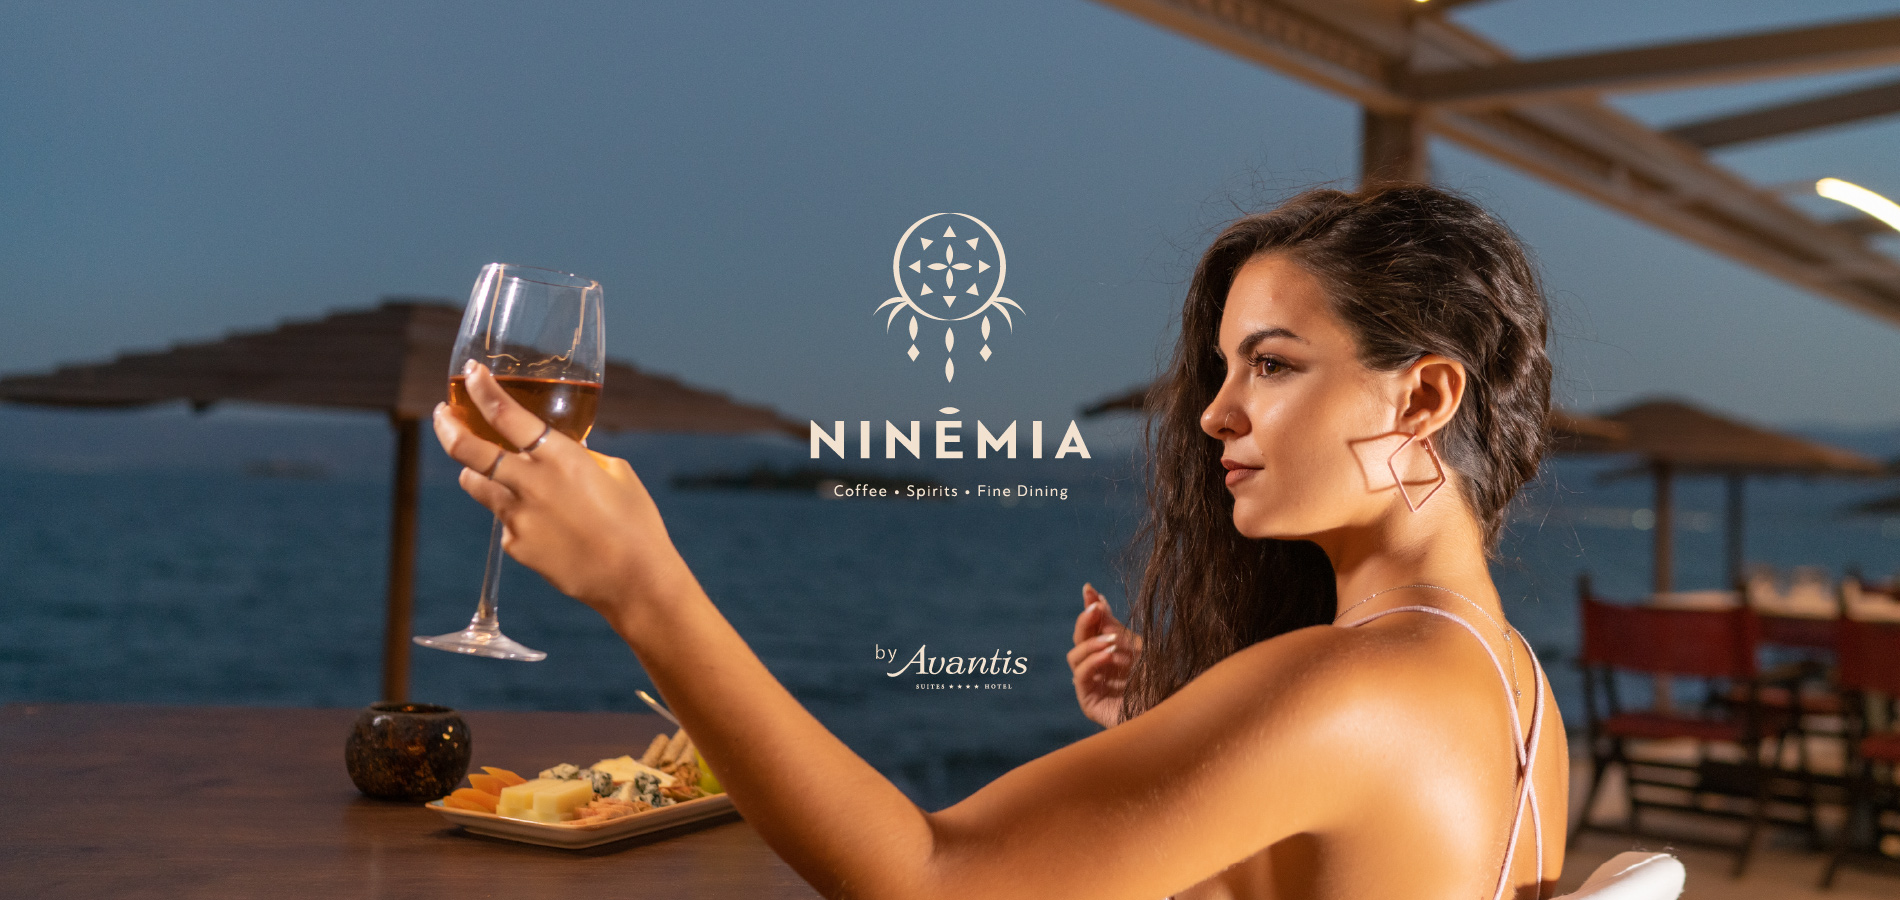 Ninemia, coffee, sppirits, fine dining. Beautifull girl with glass of wine